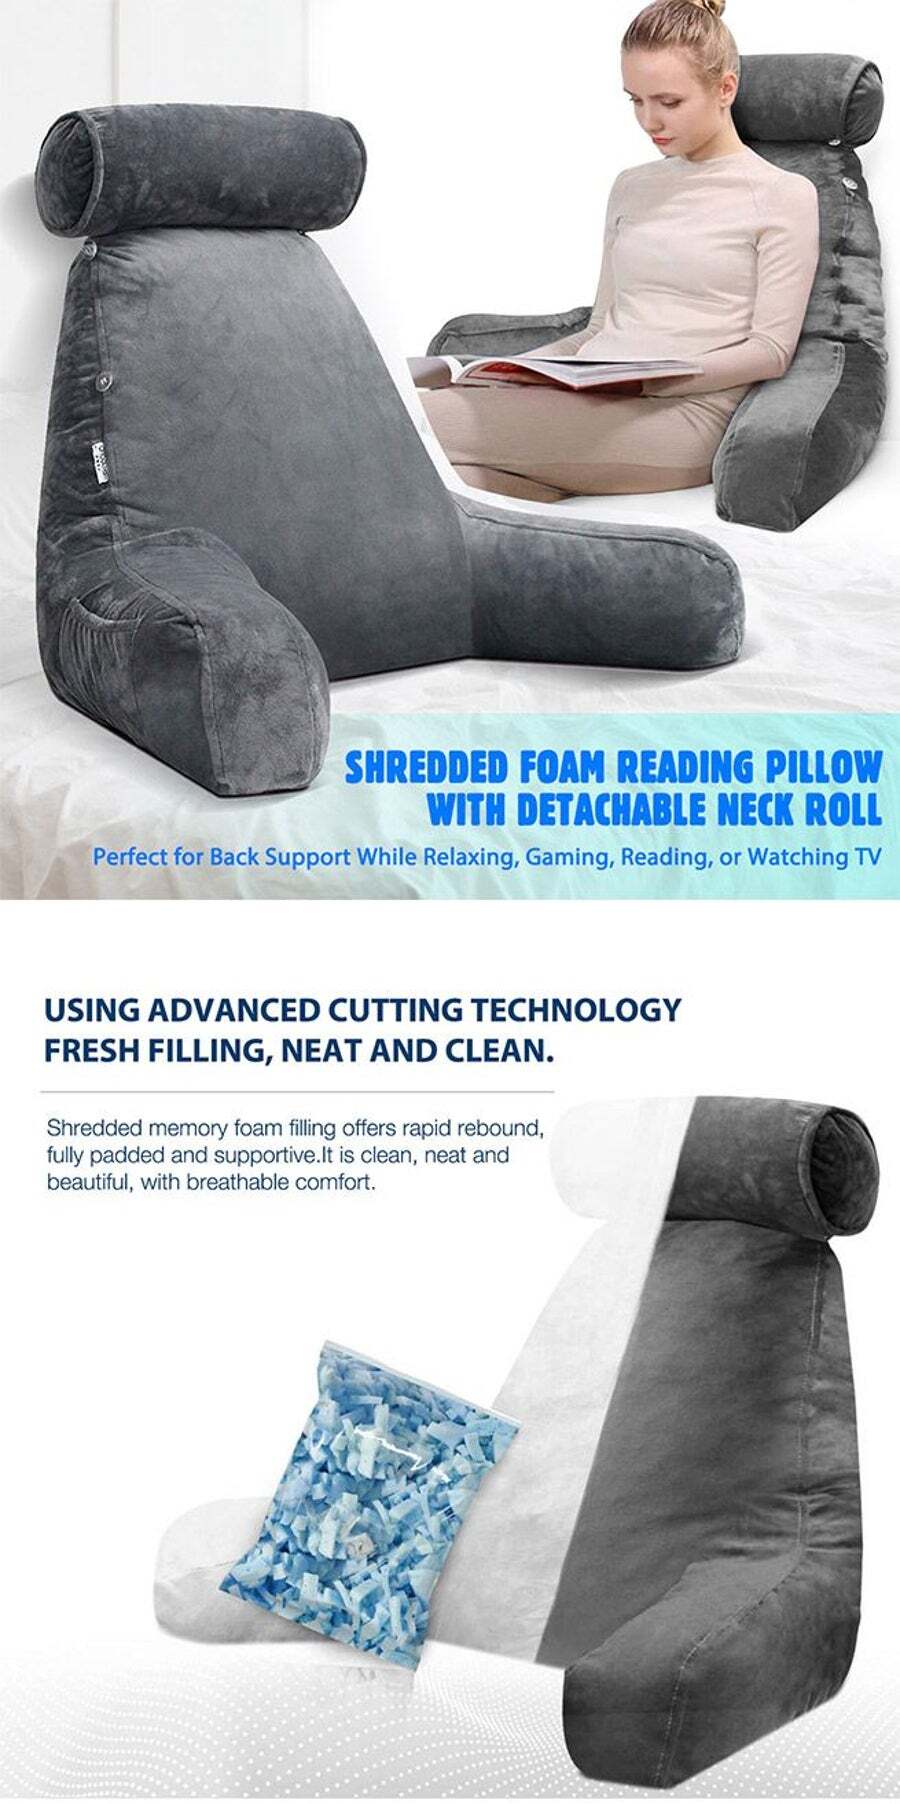 https://assets.mydeal.com.au/44447/description_bed-reading-pillow-husband-cushion-backrest-detachable-neck-roll-shredded-memory-foam-gray-7083589_00.jpg?v=637744356333402710